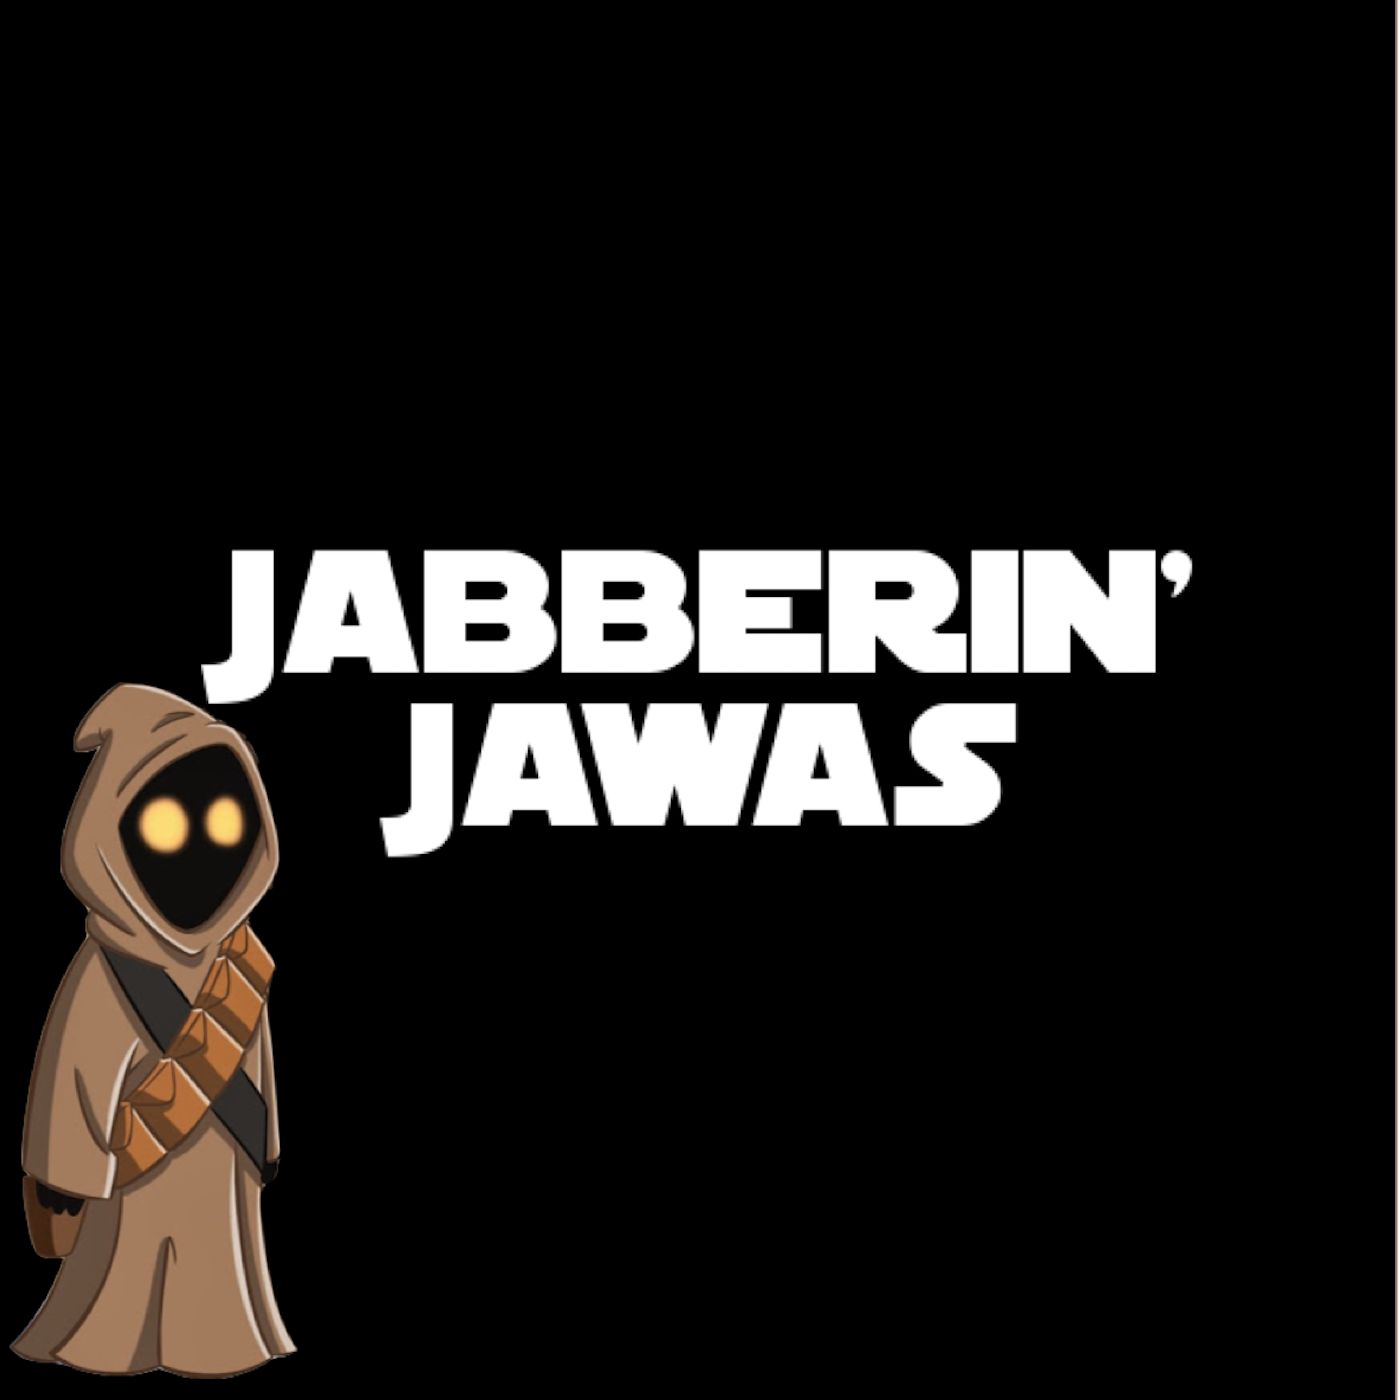 Jabberin' Jawas